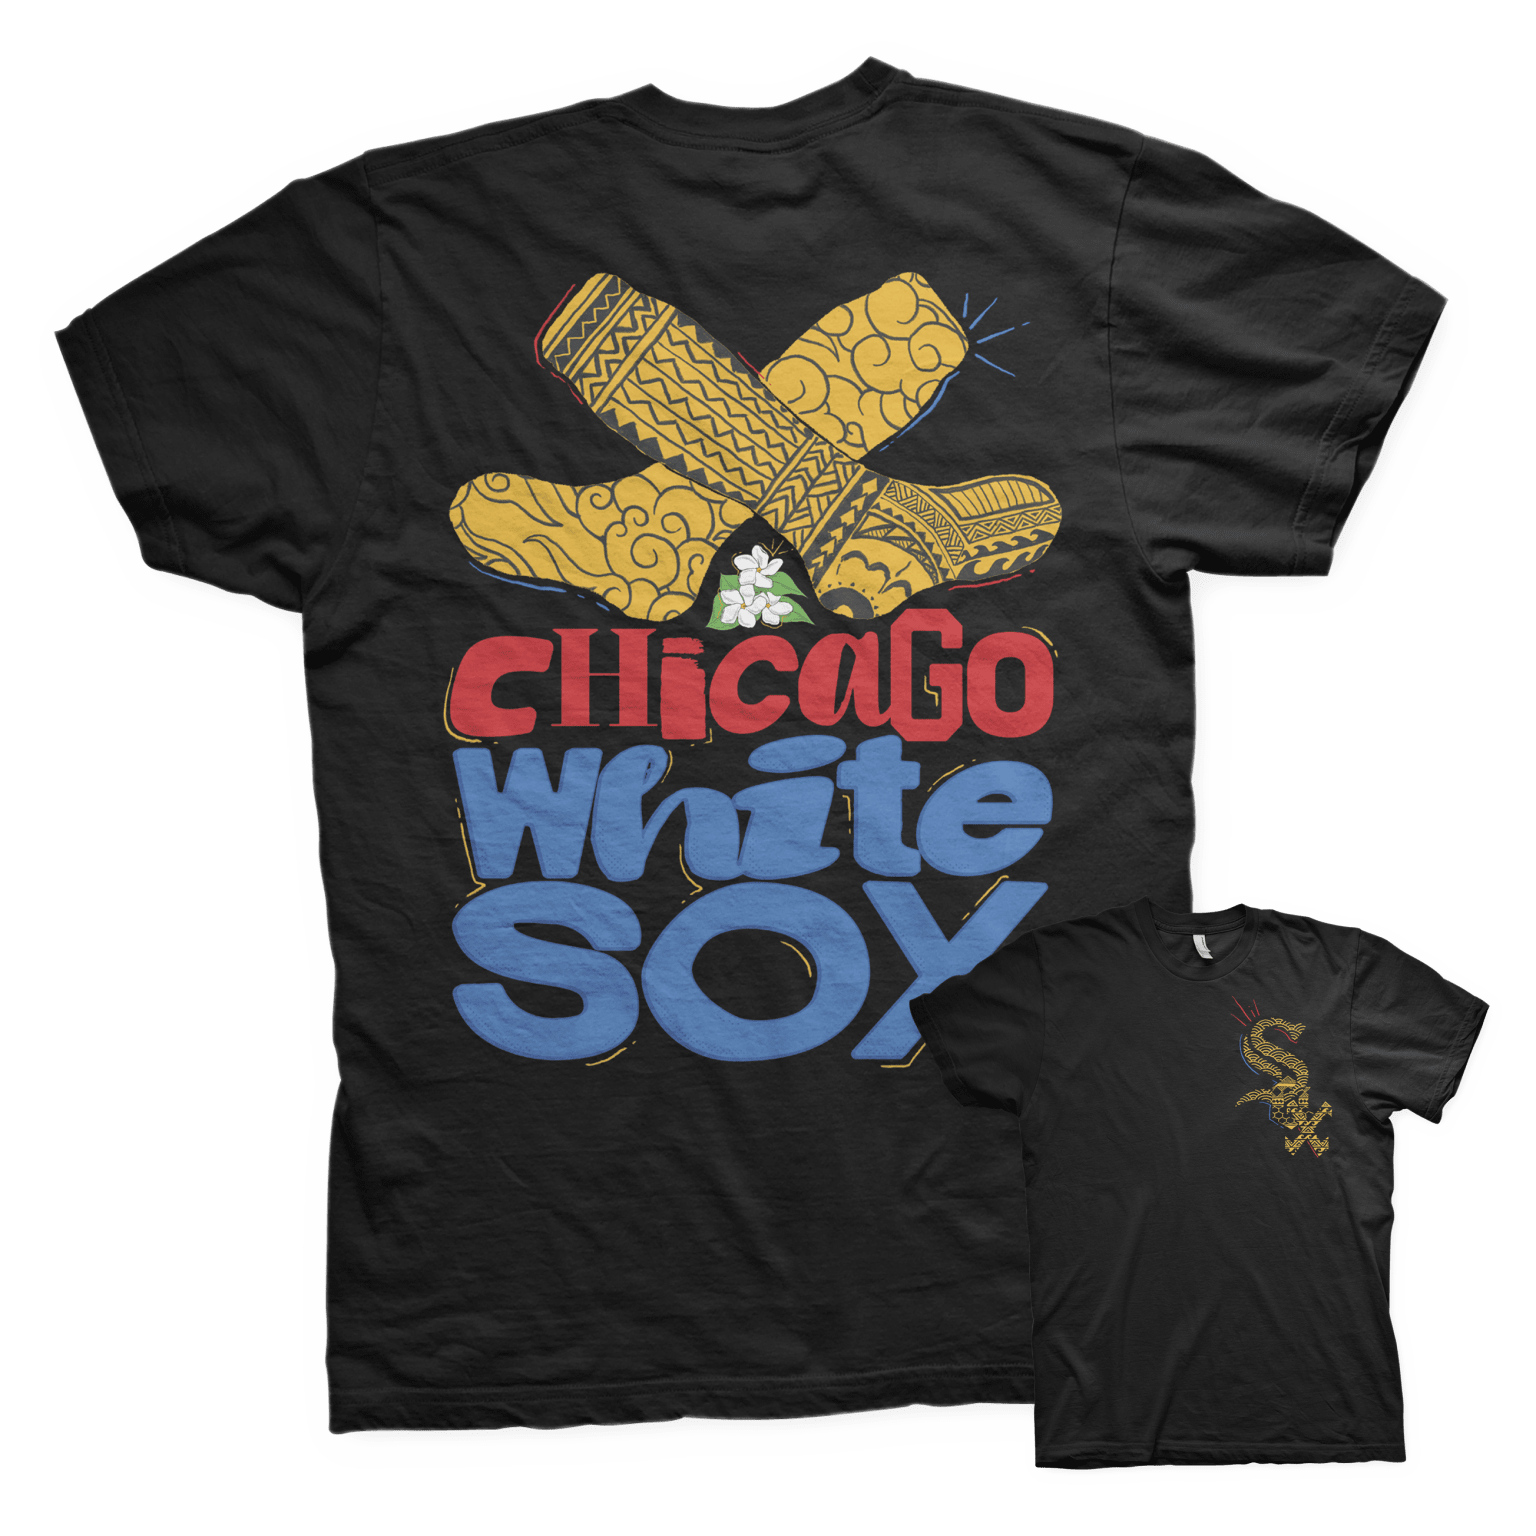 Chicago White Sox Are Selling Anti-Ketchup T-Shirts This Season : r/baseball